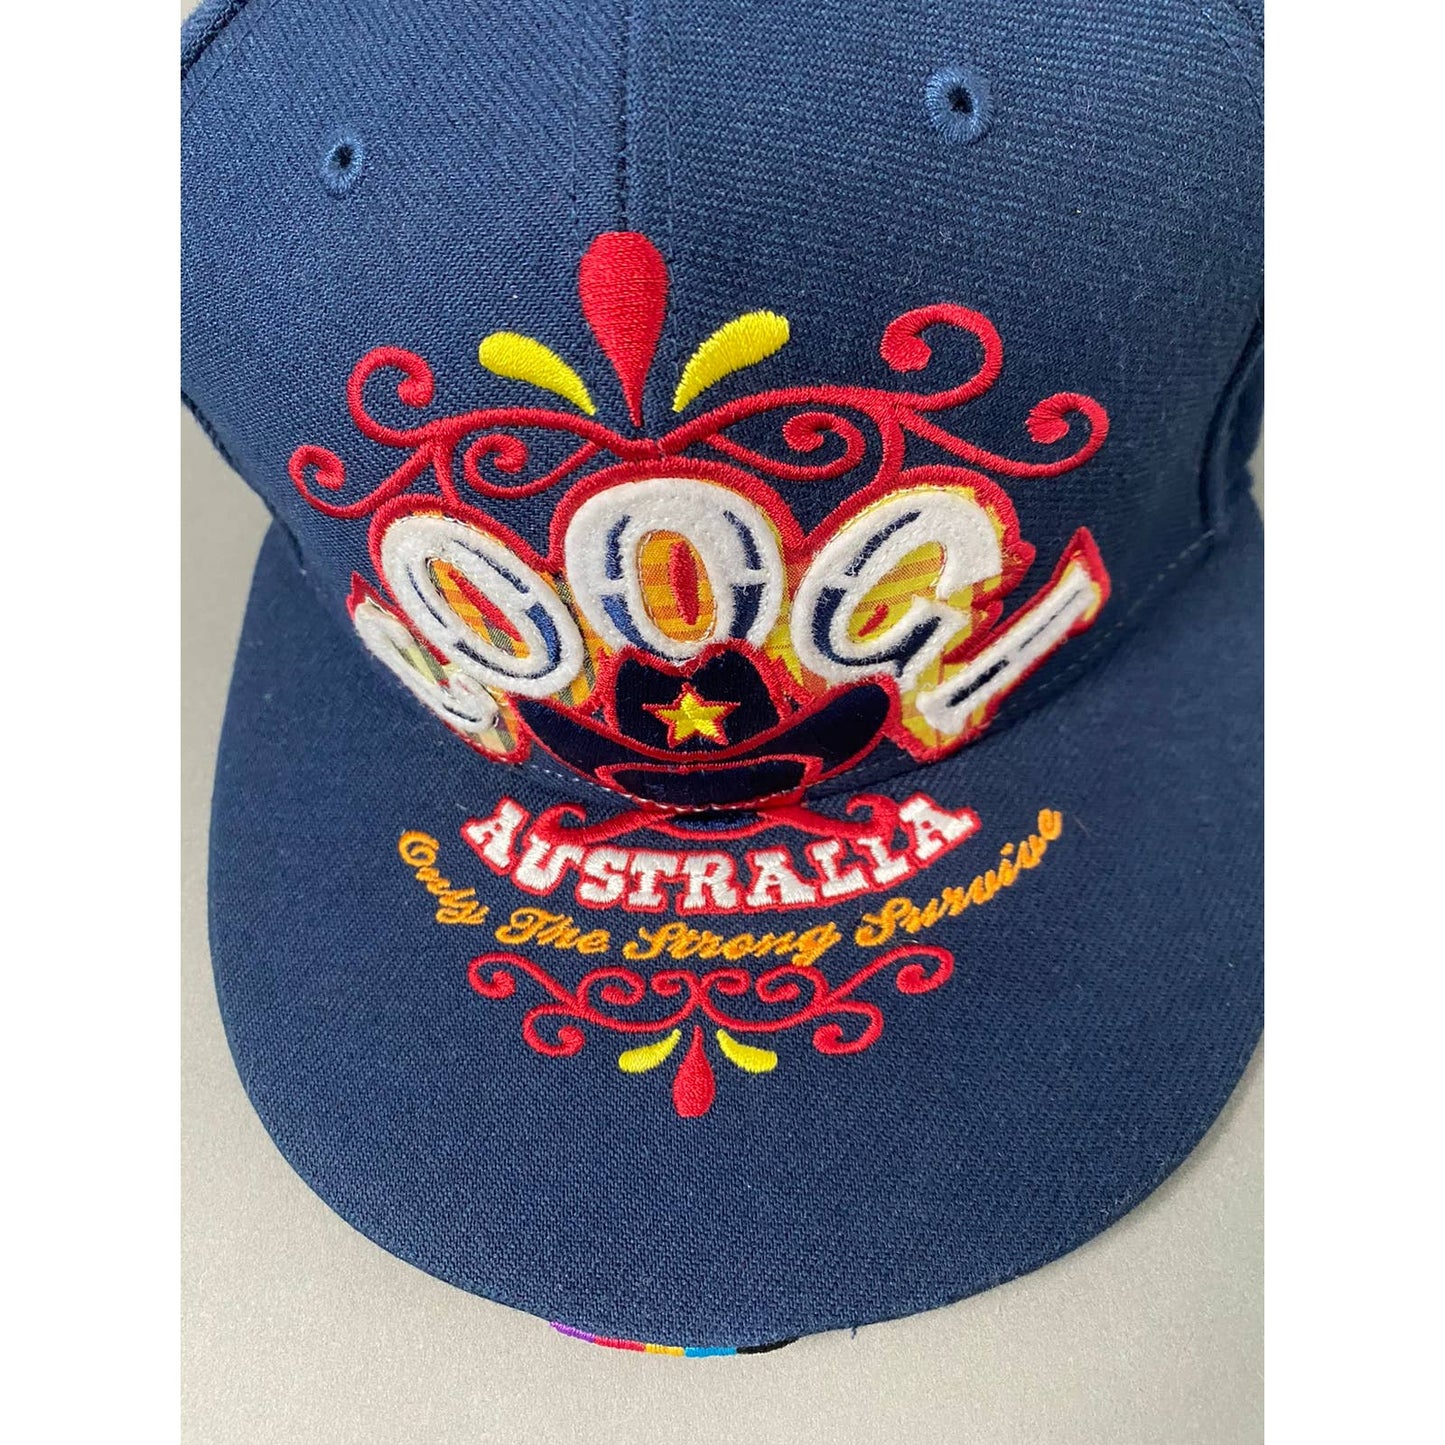 Coogi vintage navy cap snap back big logo trucker hat